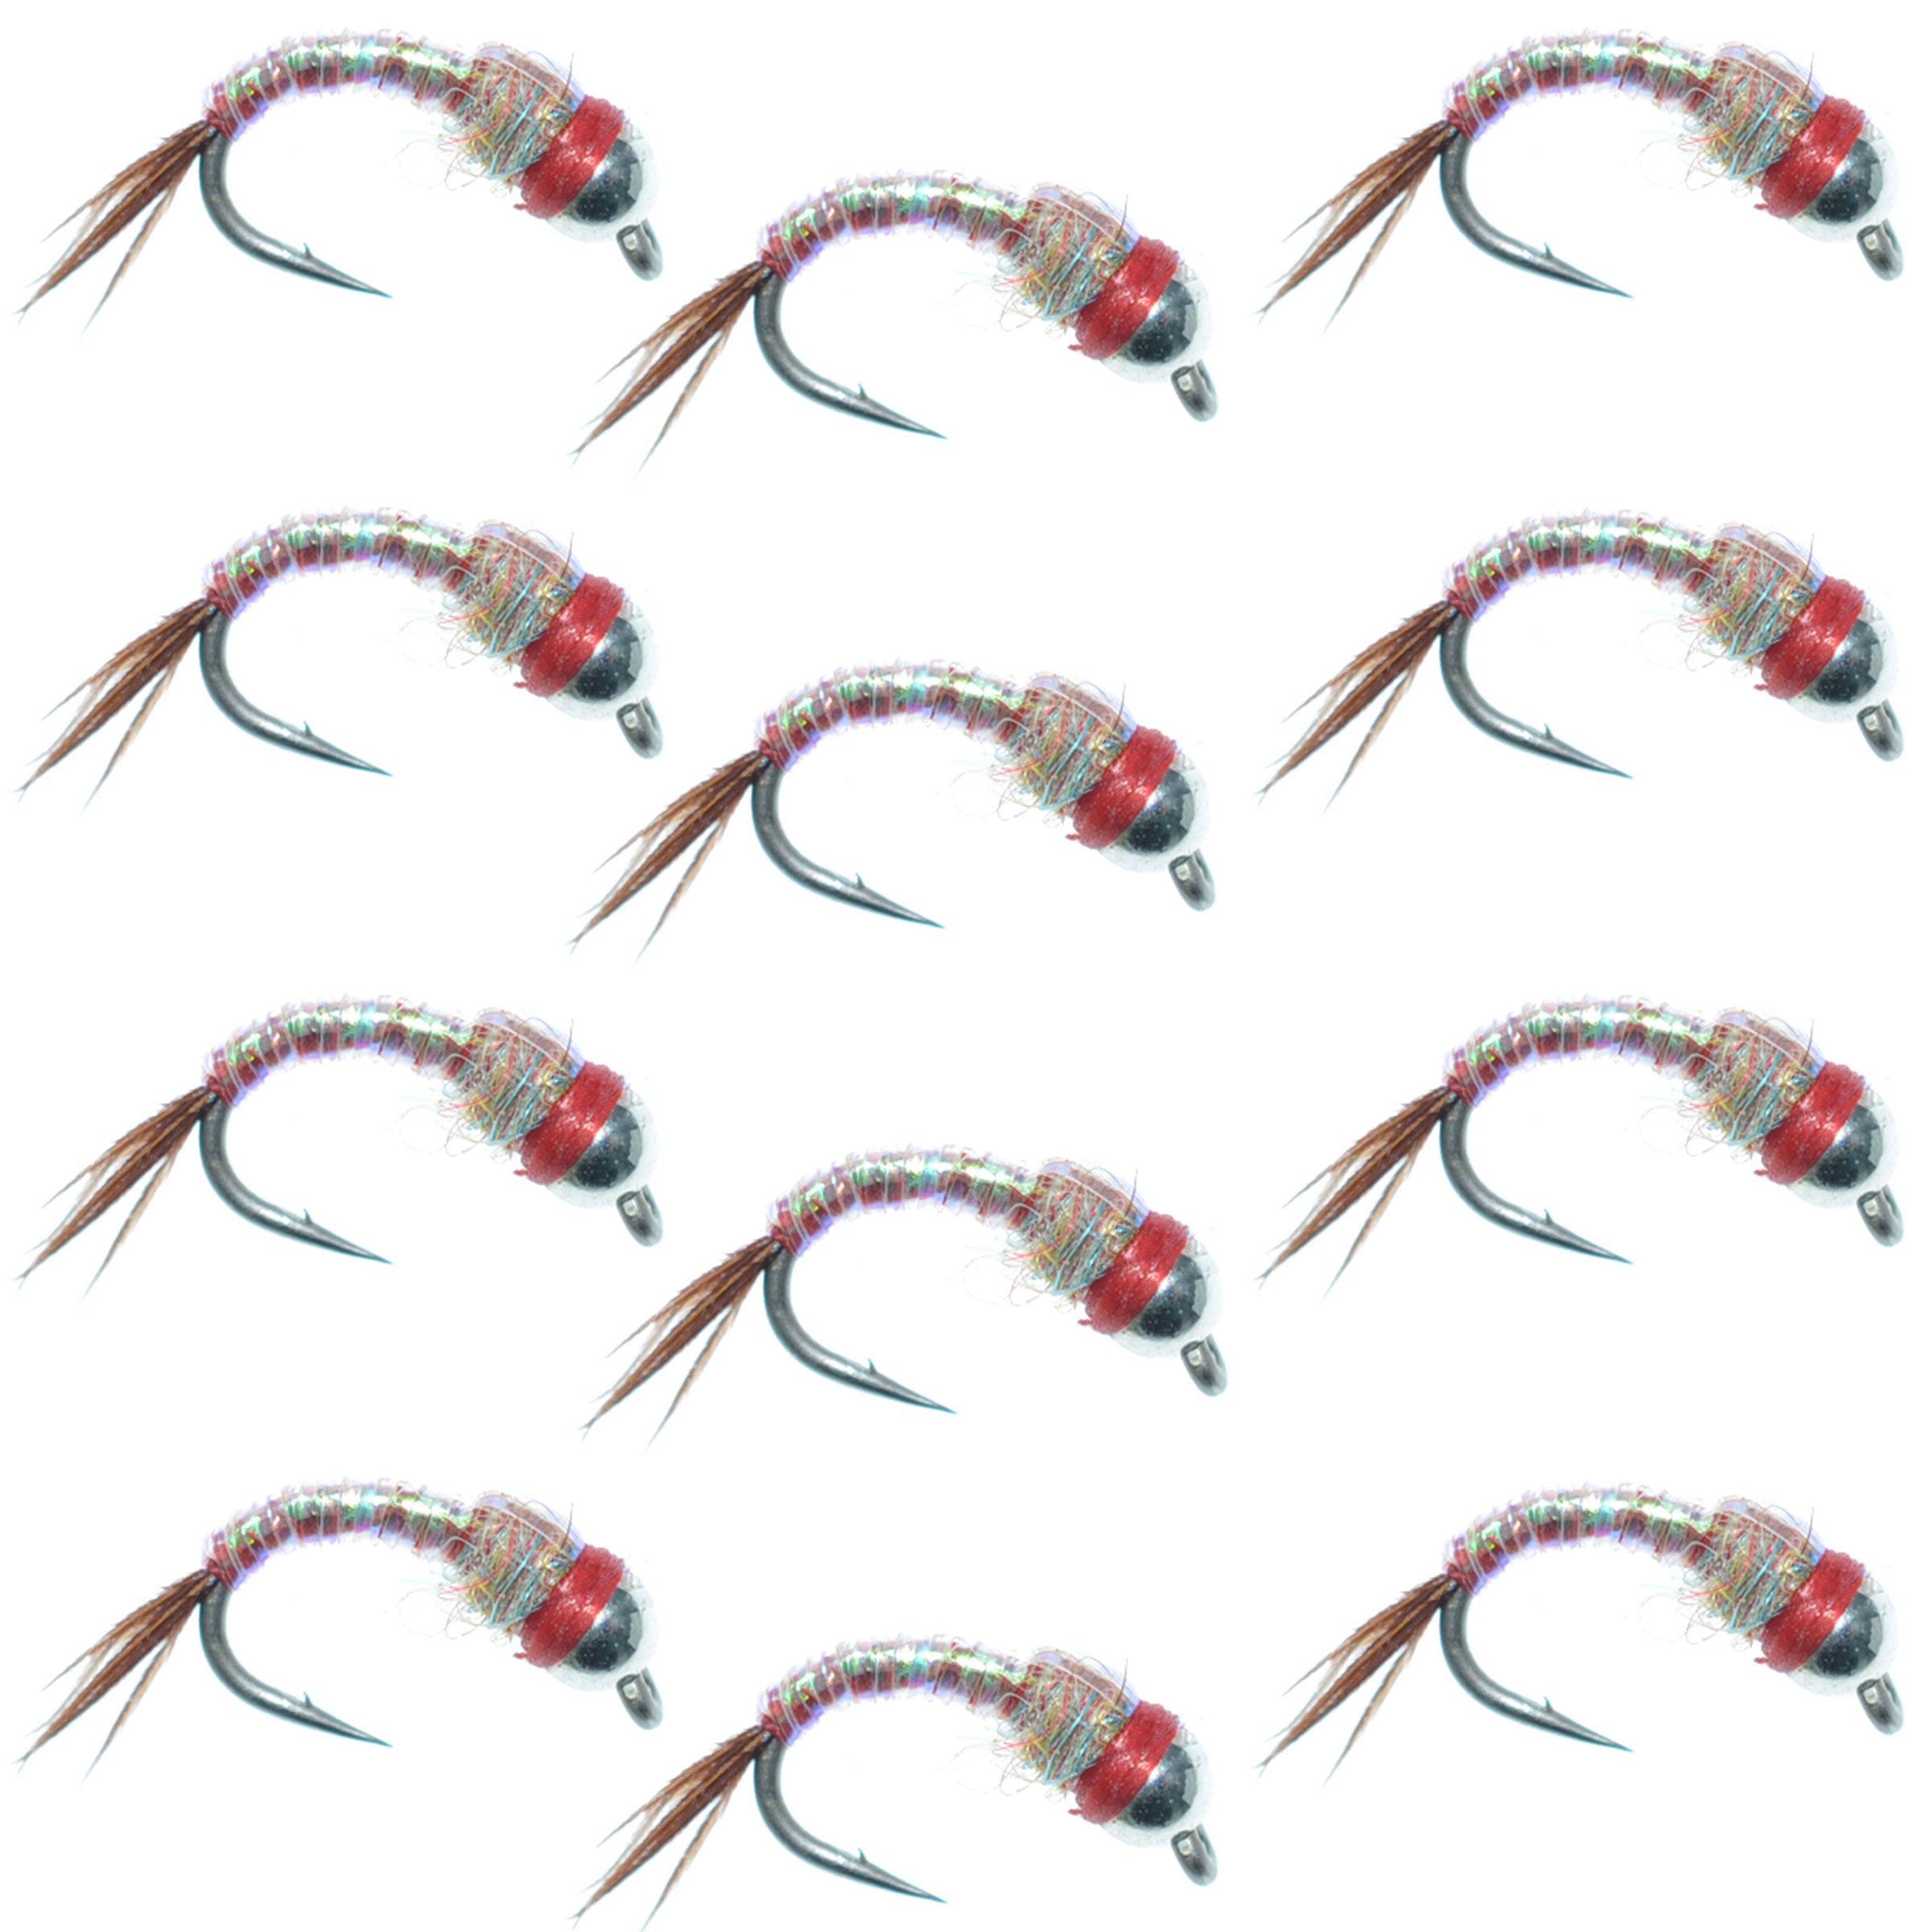 Bead Head Rainbow Warrior Nymph Fly Fishing Flies One Dozen Hook Size 14